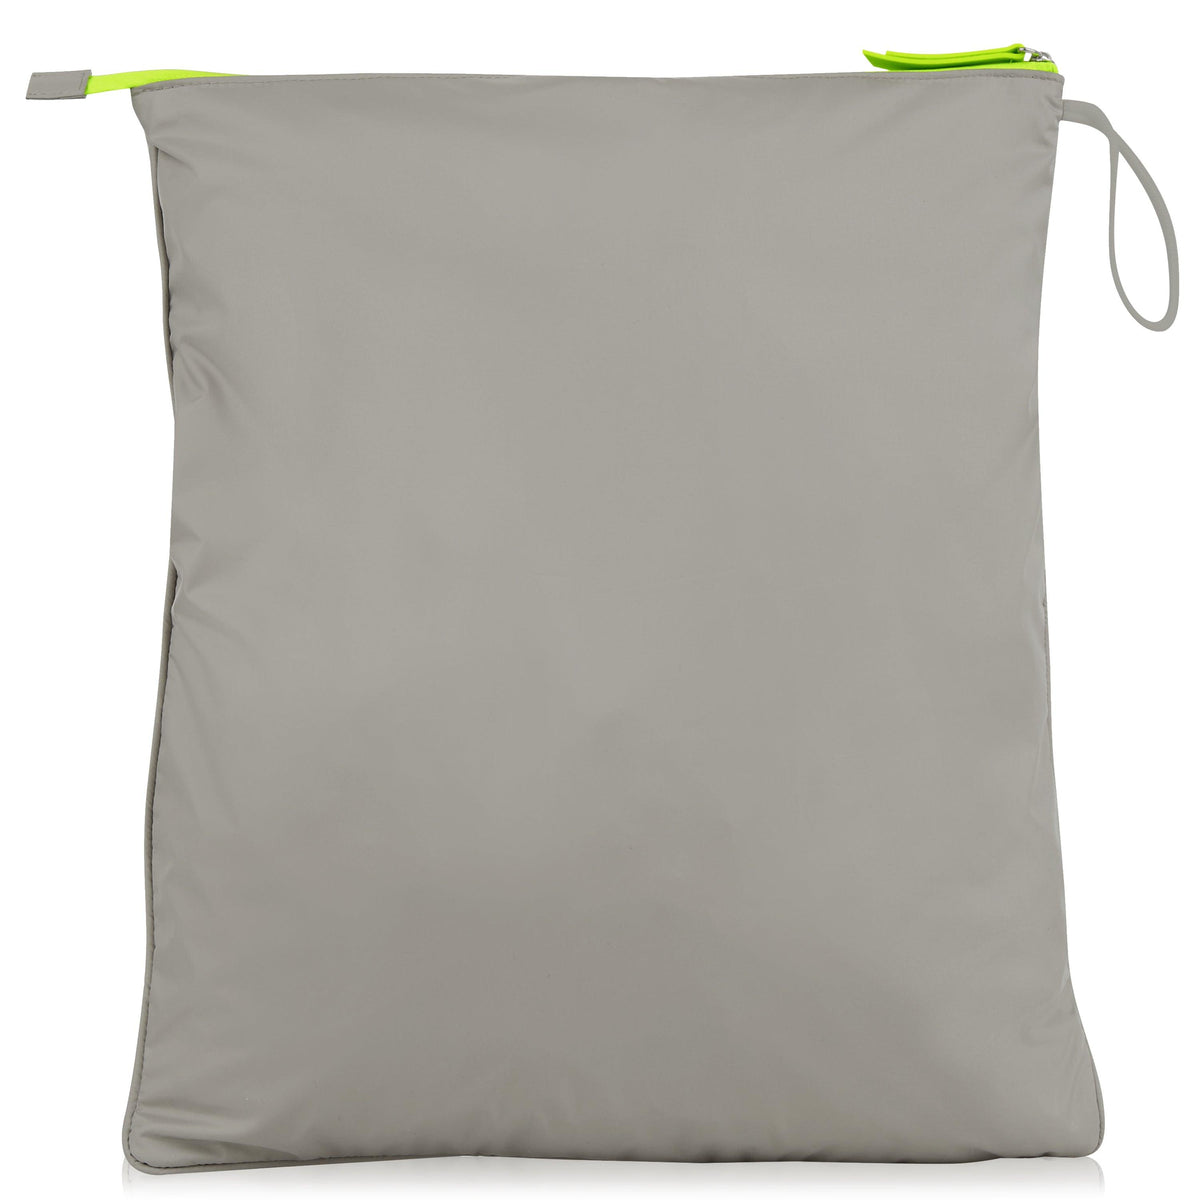 Rear view of Walnut Neon Green Sweat Bag